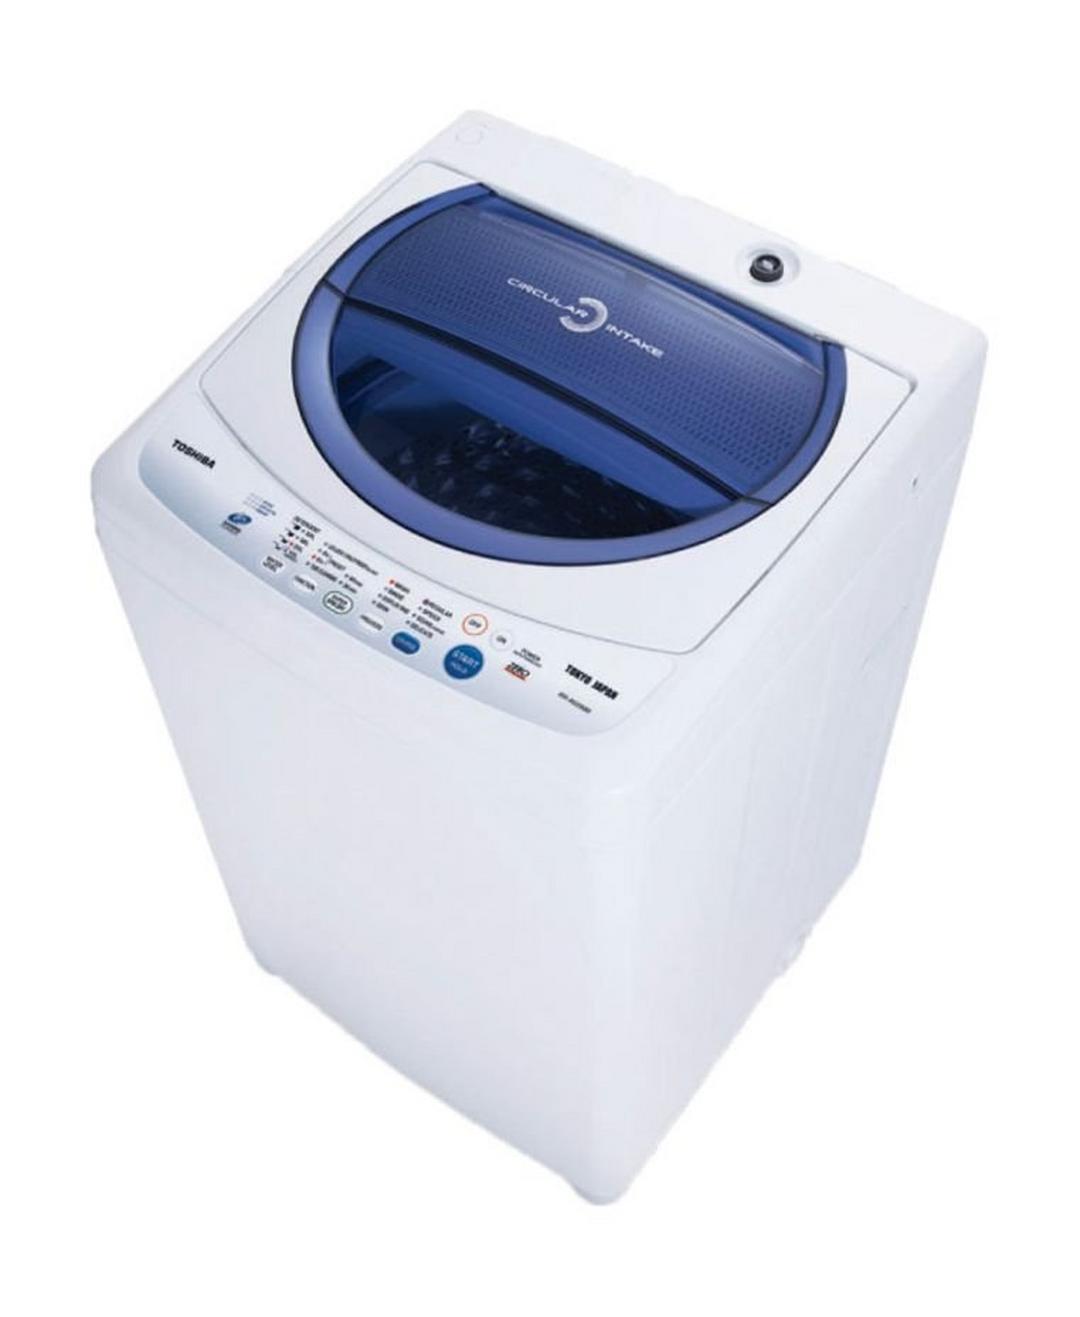 Toshiba 7kg Top Load Washing Machine (AW-F805MB(WV)) - White